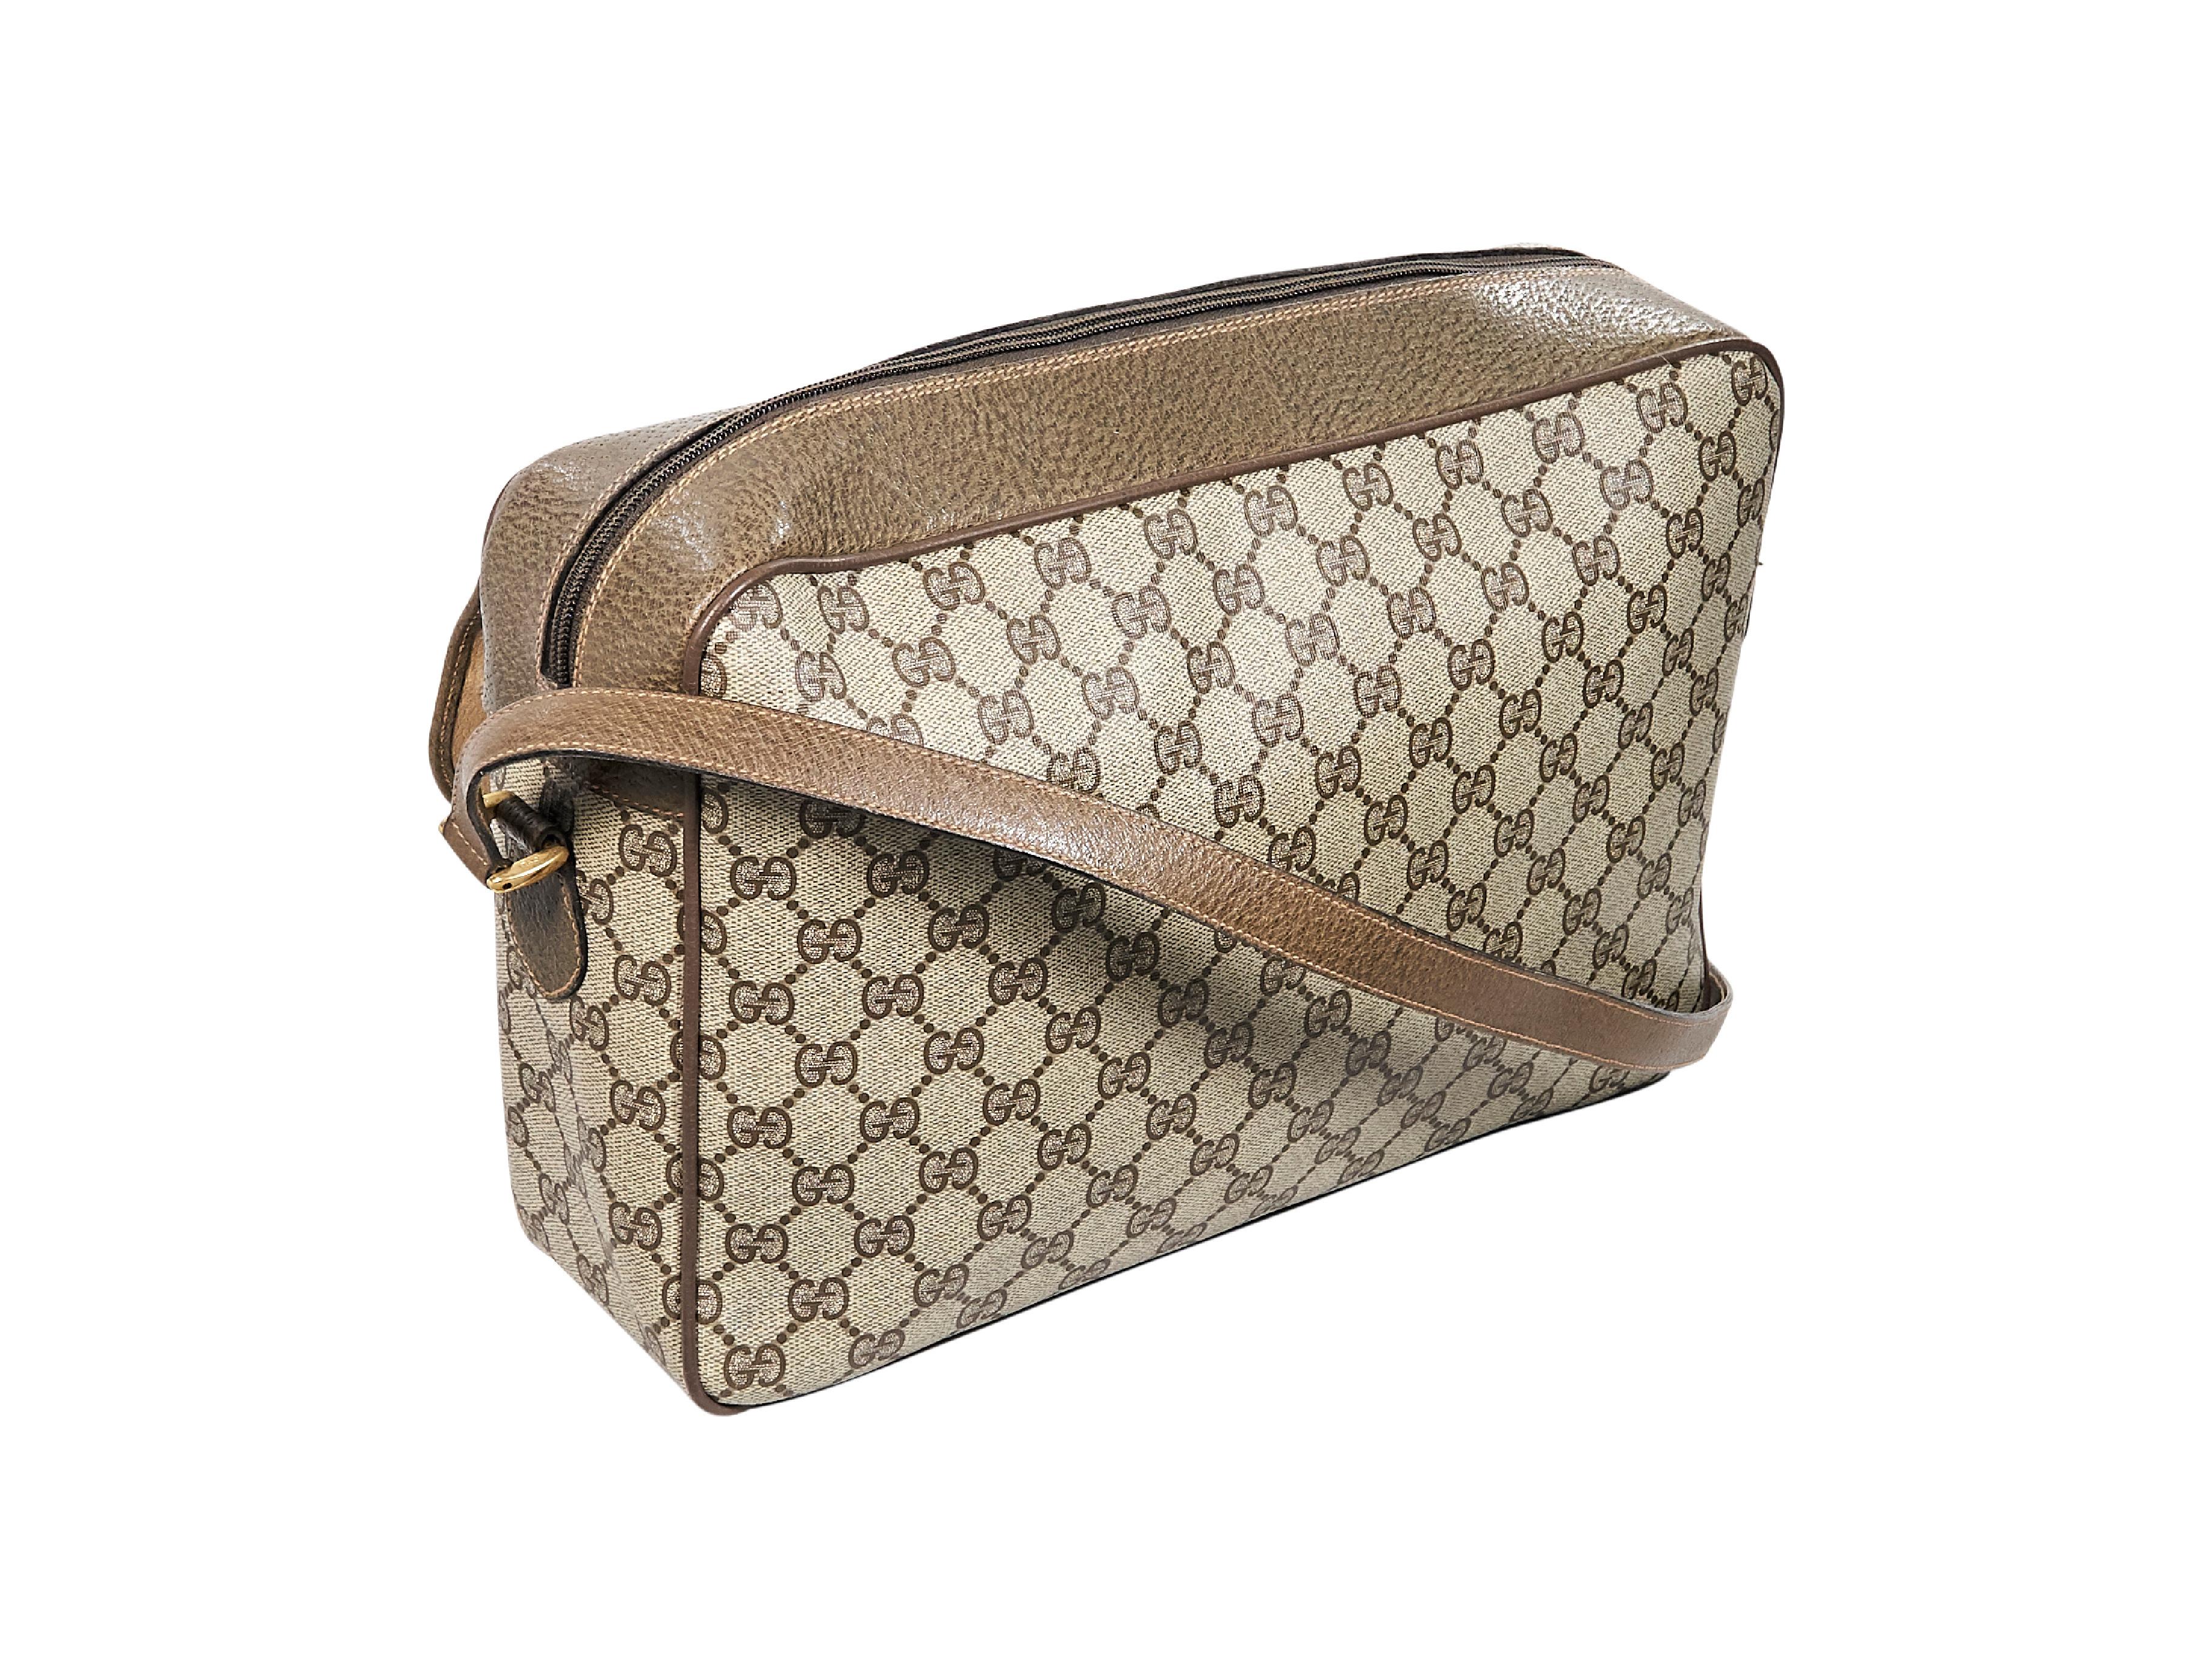 Product details:  Vintage beige logo messenger bag by Gucci.  Trimmed with leather.  Top zip closure.  Lined interior with inner zip pocket.  Front exterior flap pocket.  Goldtone hardware.  12.5